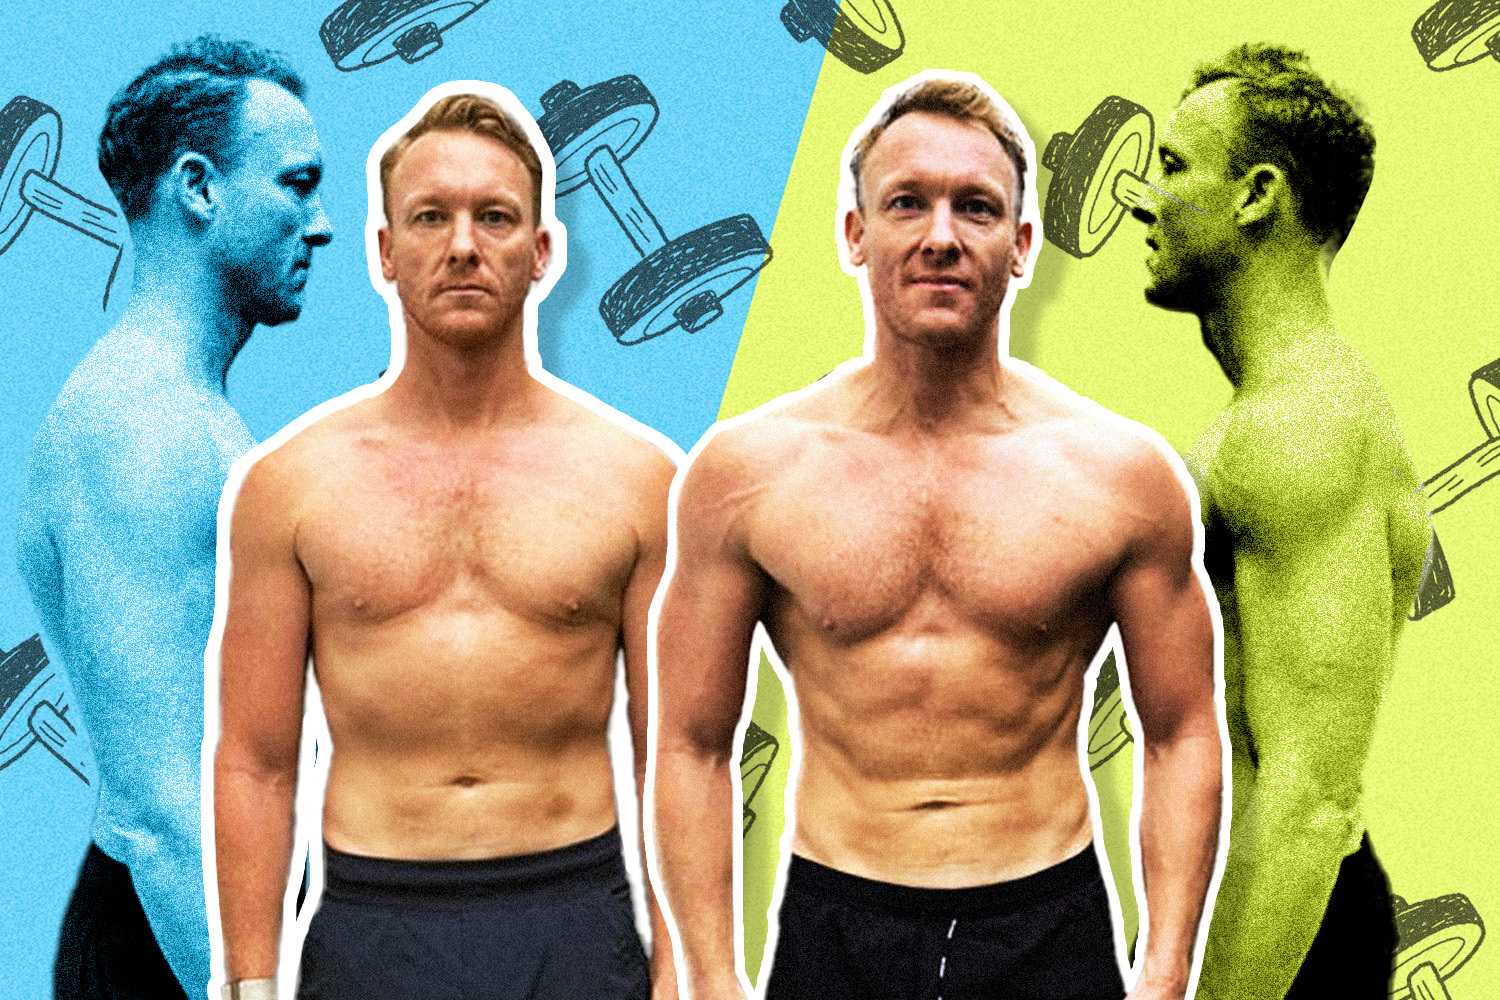 La transformación corporal de 3 meses de Luc Wiesman: De normal a asombroso